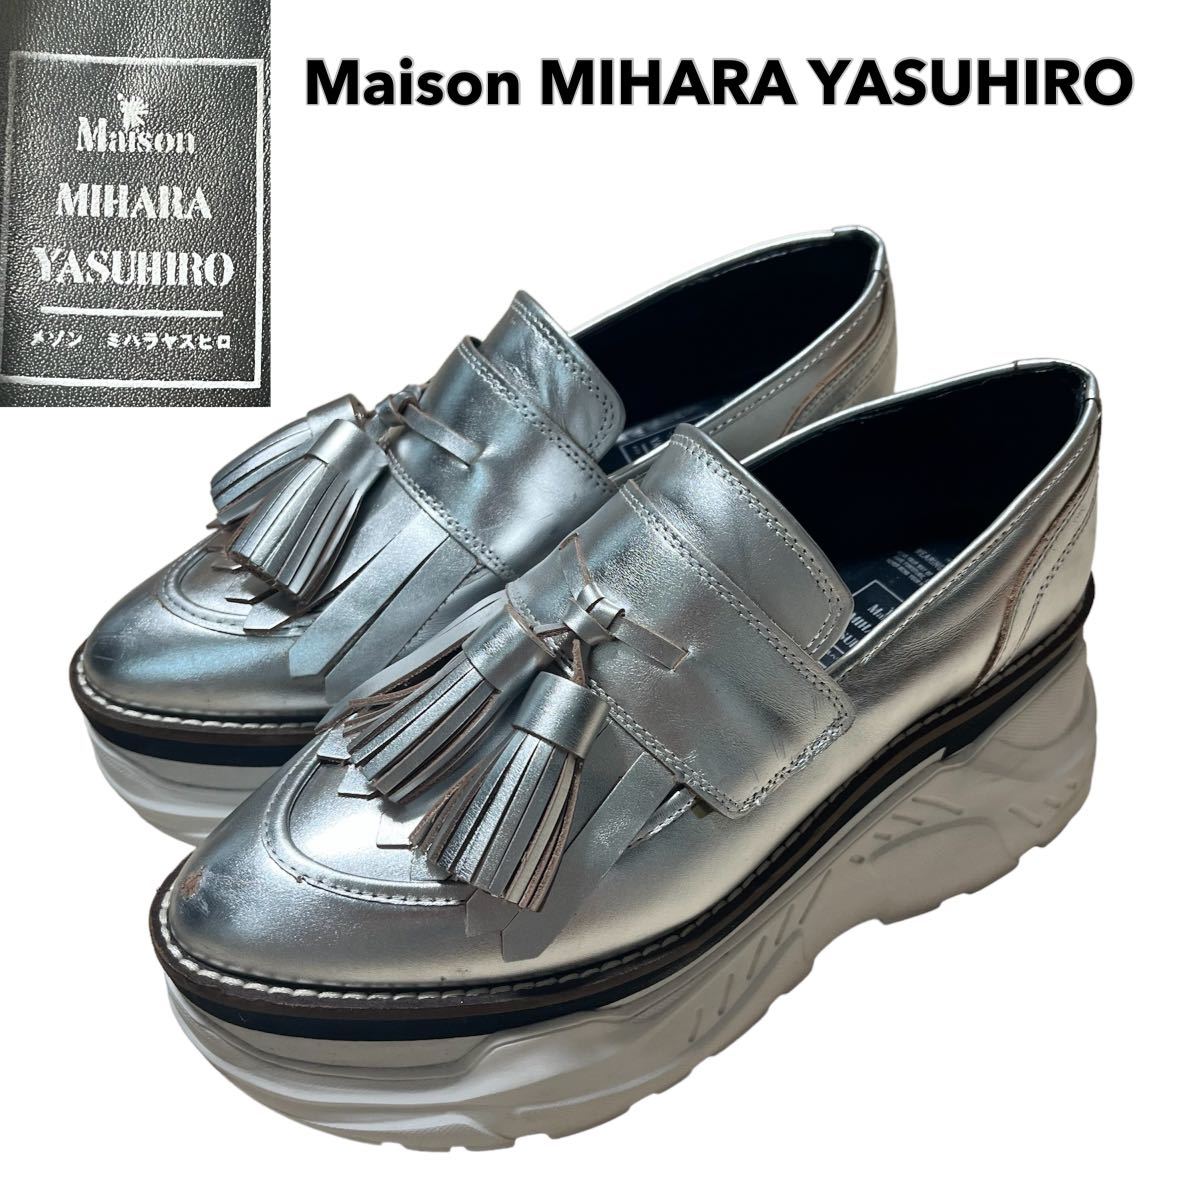 Maison MIHARA YASUHIRO メゾン ミハラヤスヒロ タッセル 厚底スニーカー シューズ シルバー 39 レディース